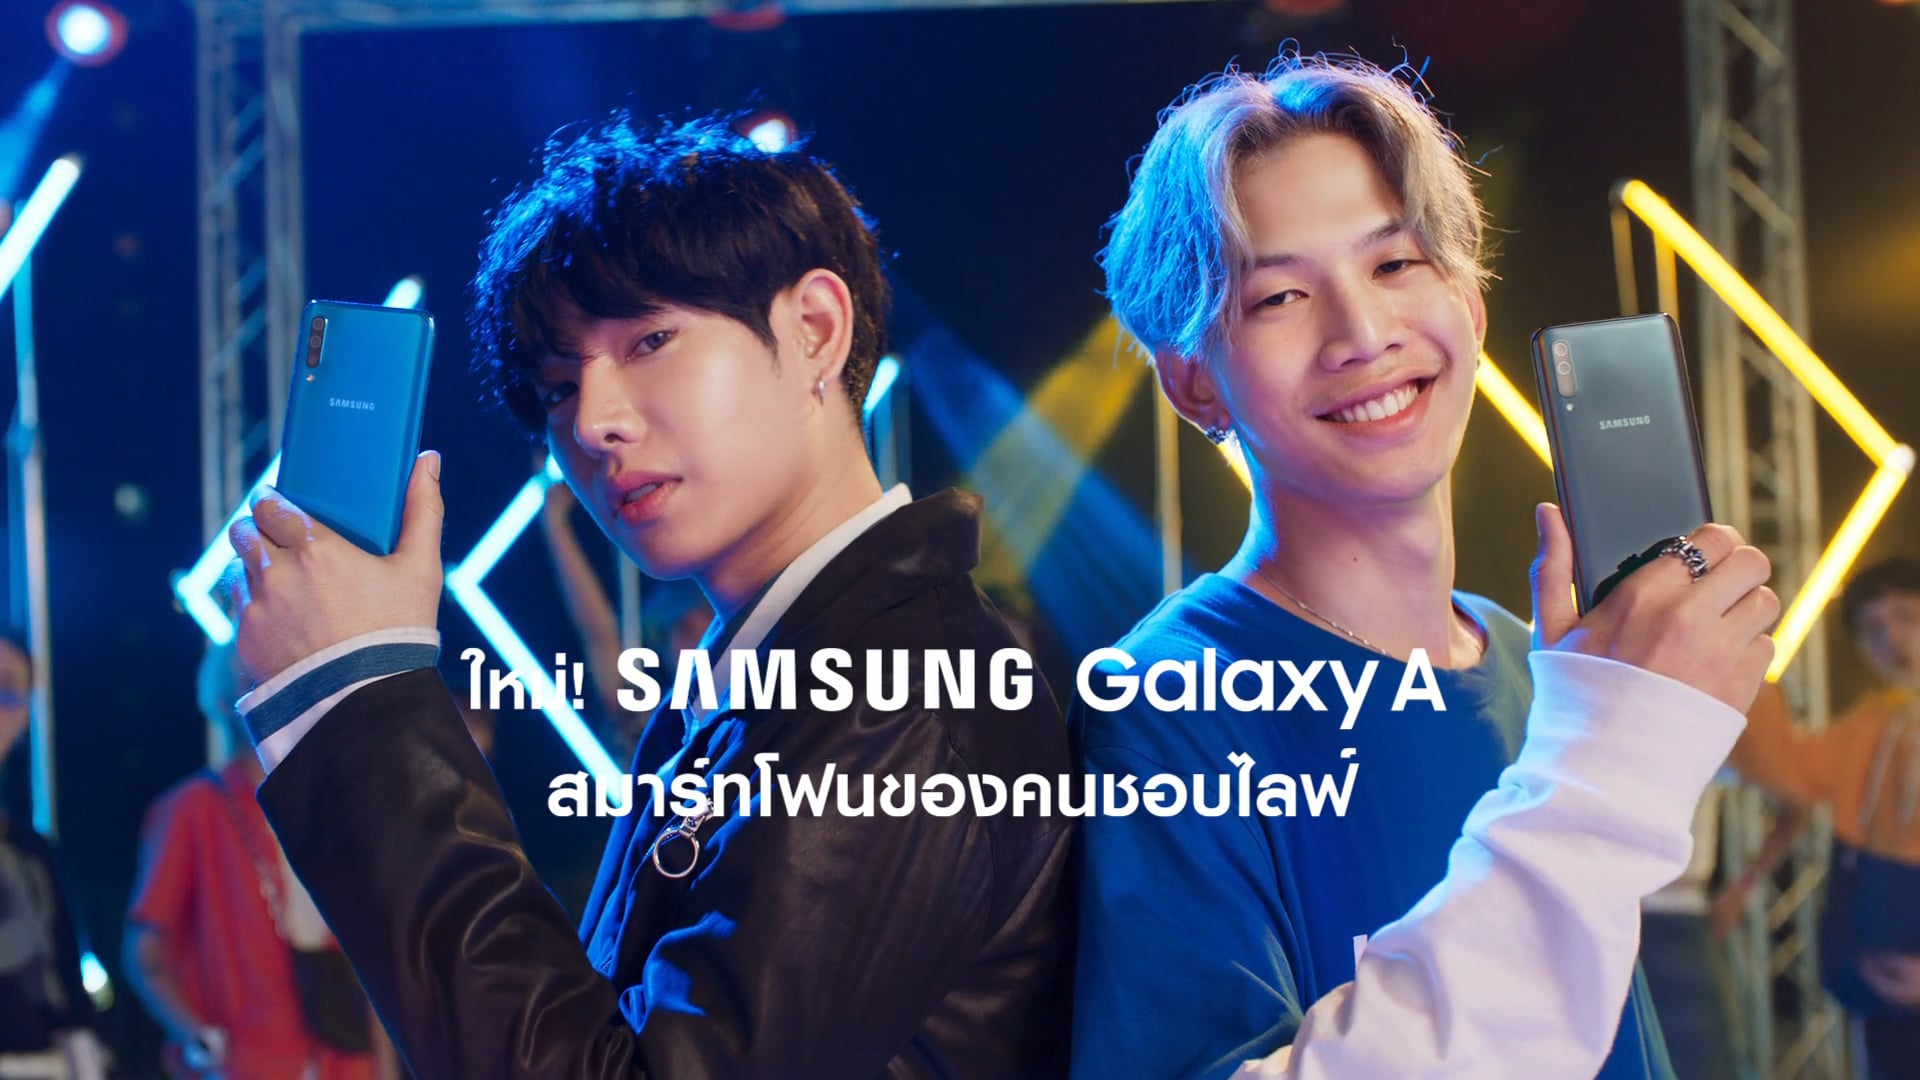 Samsung Galaxy A50 - GenZ LIVE NOW!